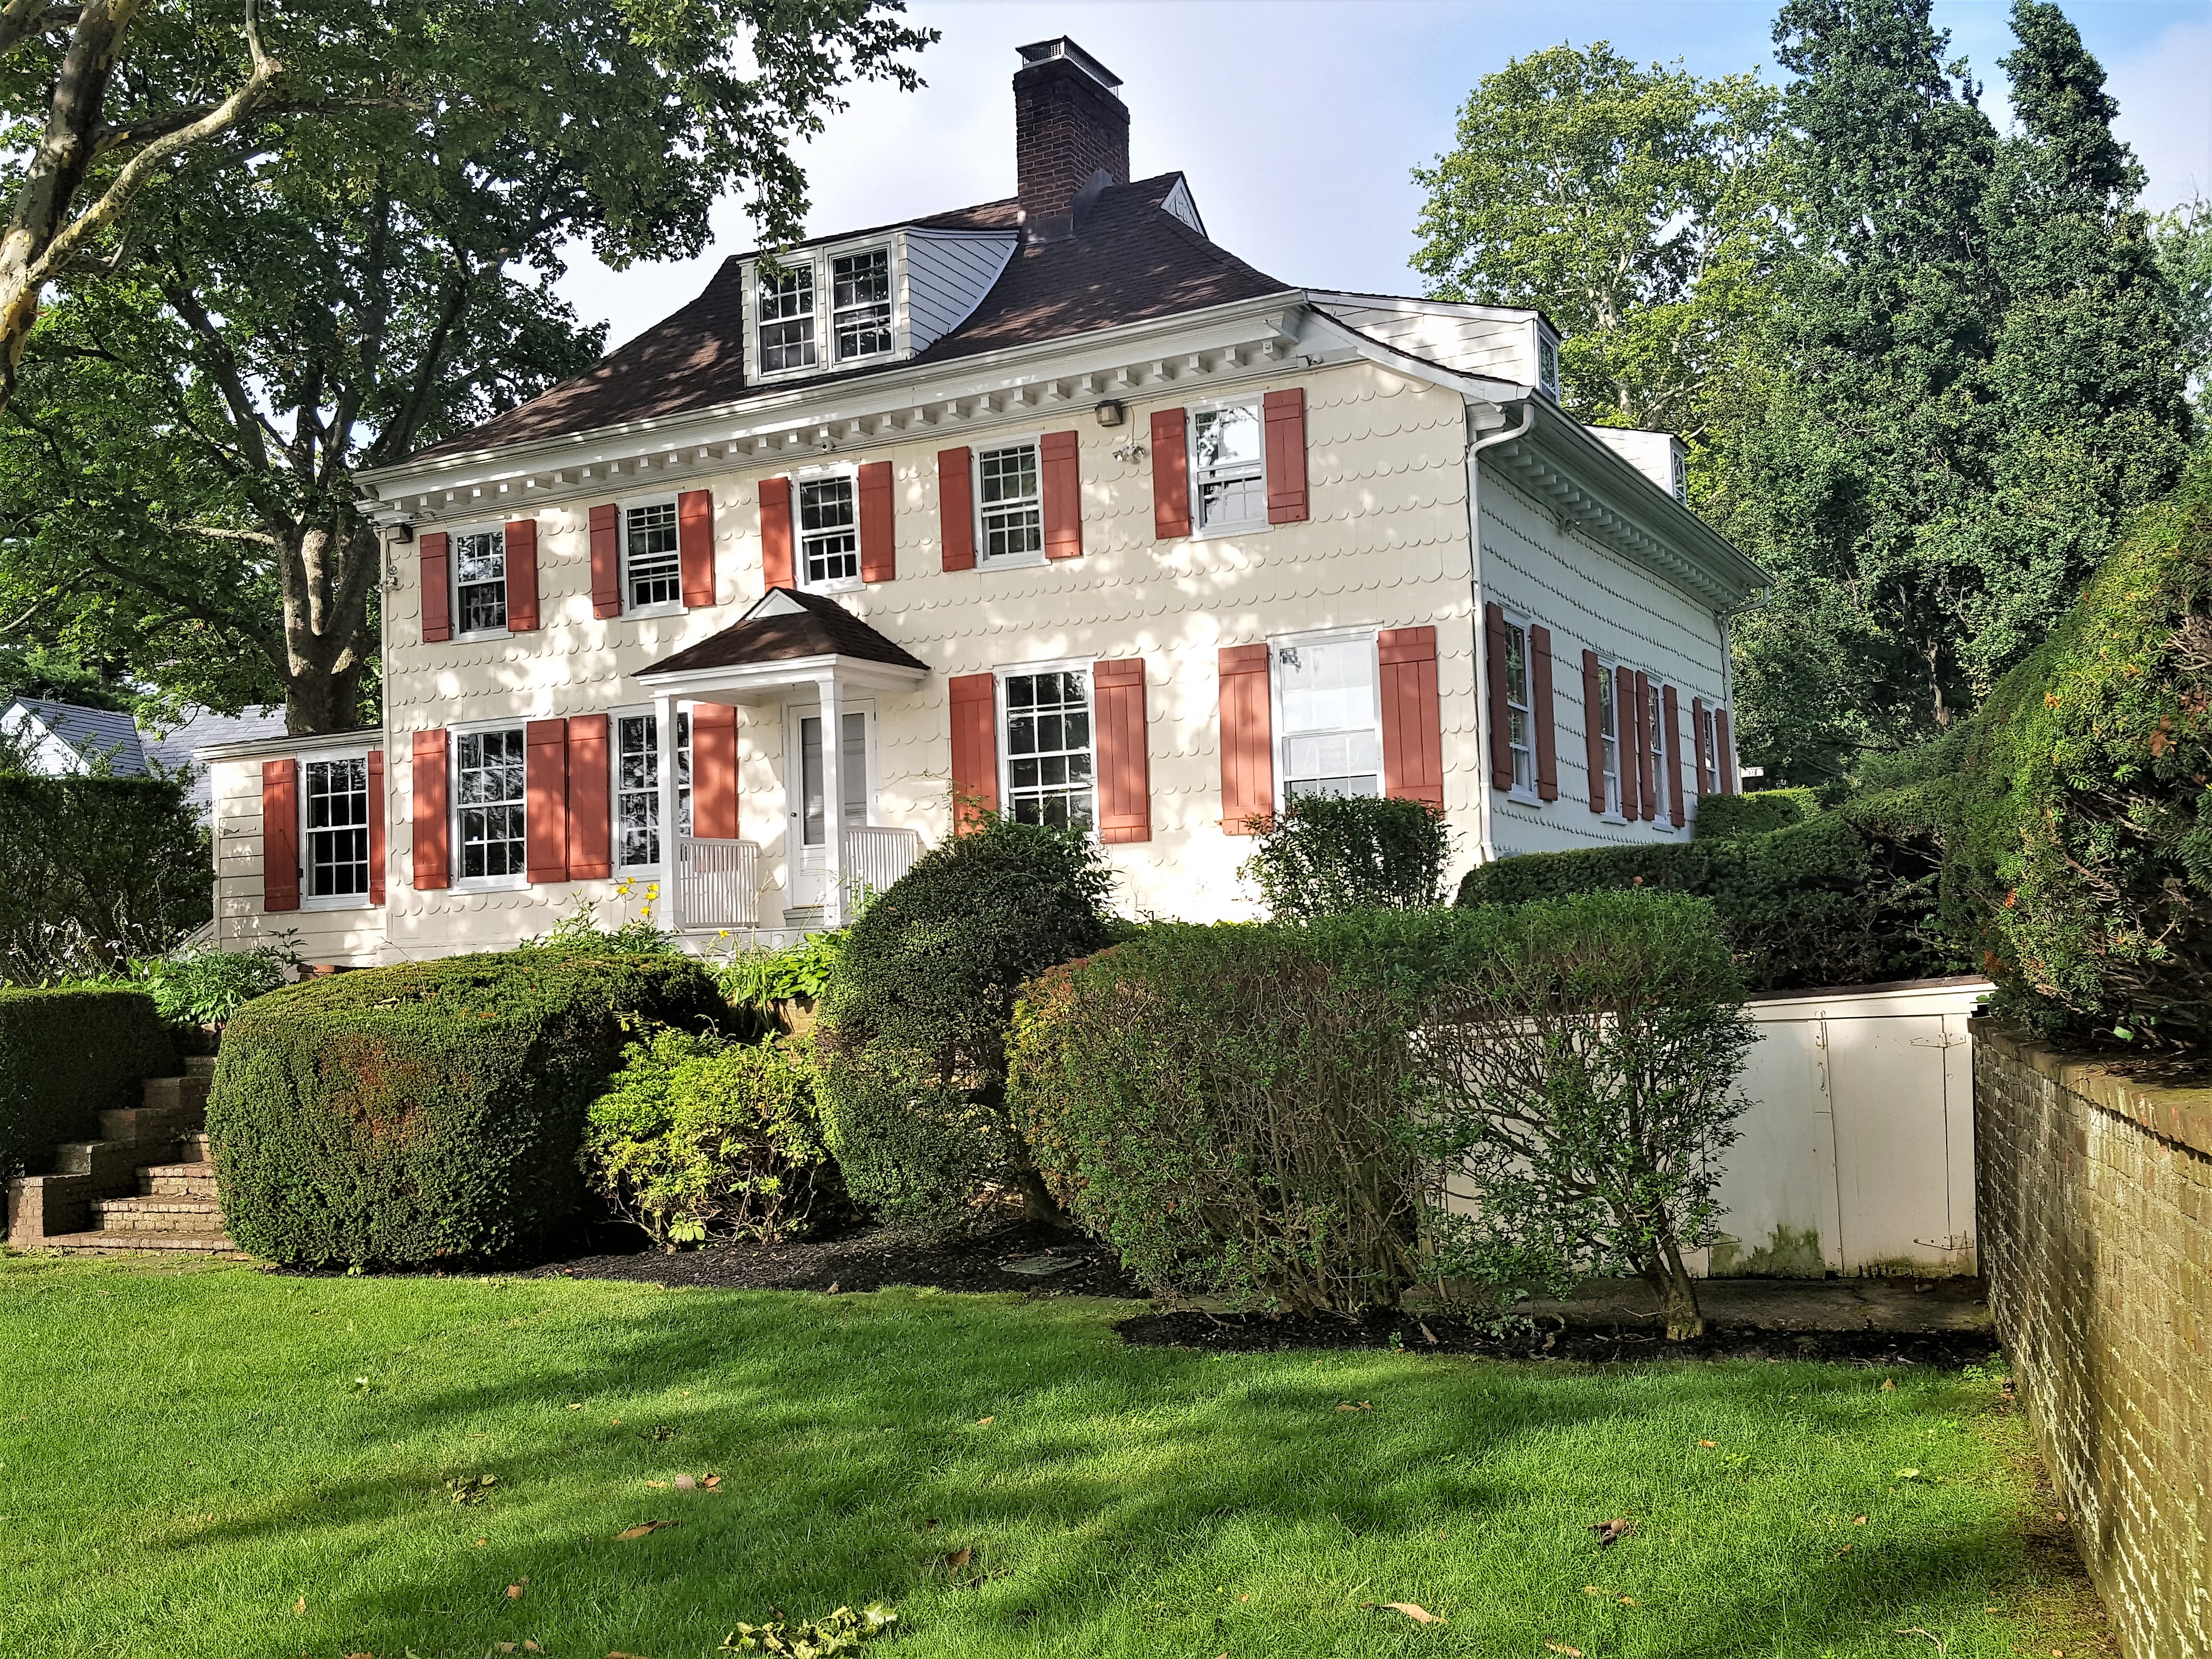 Summoose Tales - Wynant Van Zandt III bought the Cornelius Van Wyck House in 1819